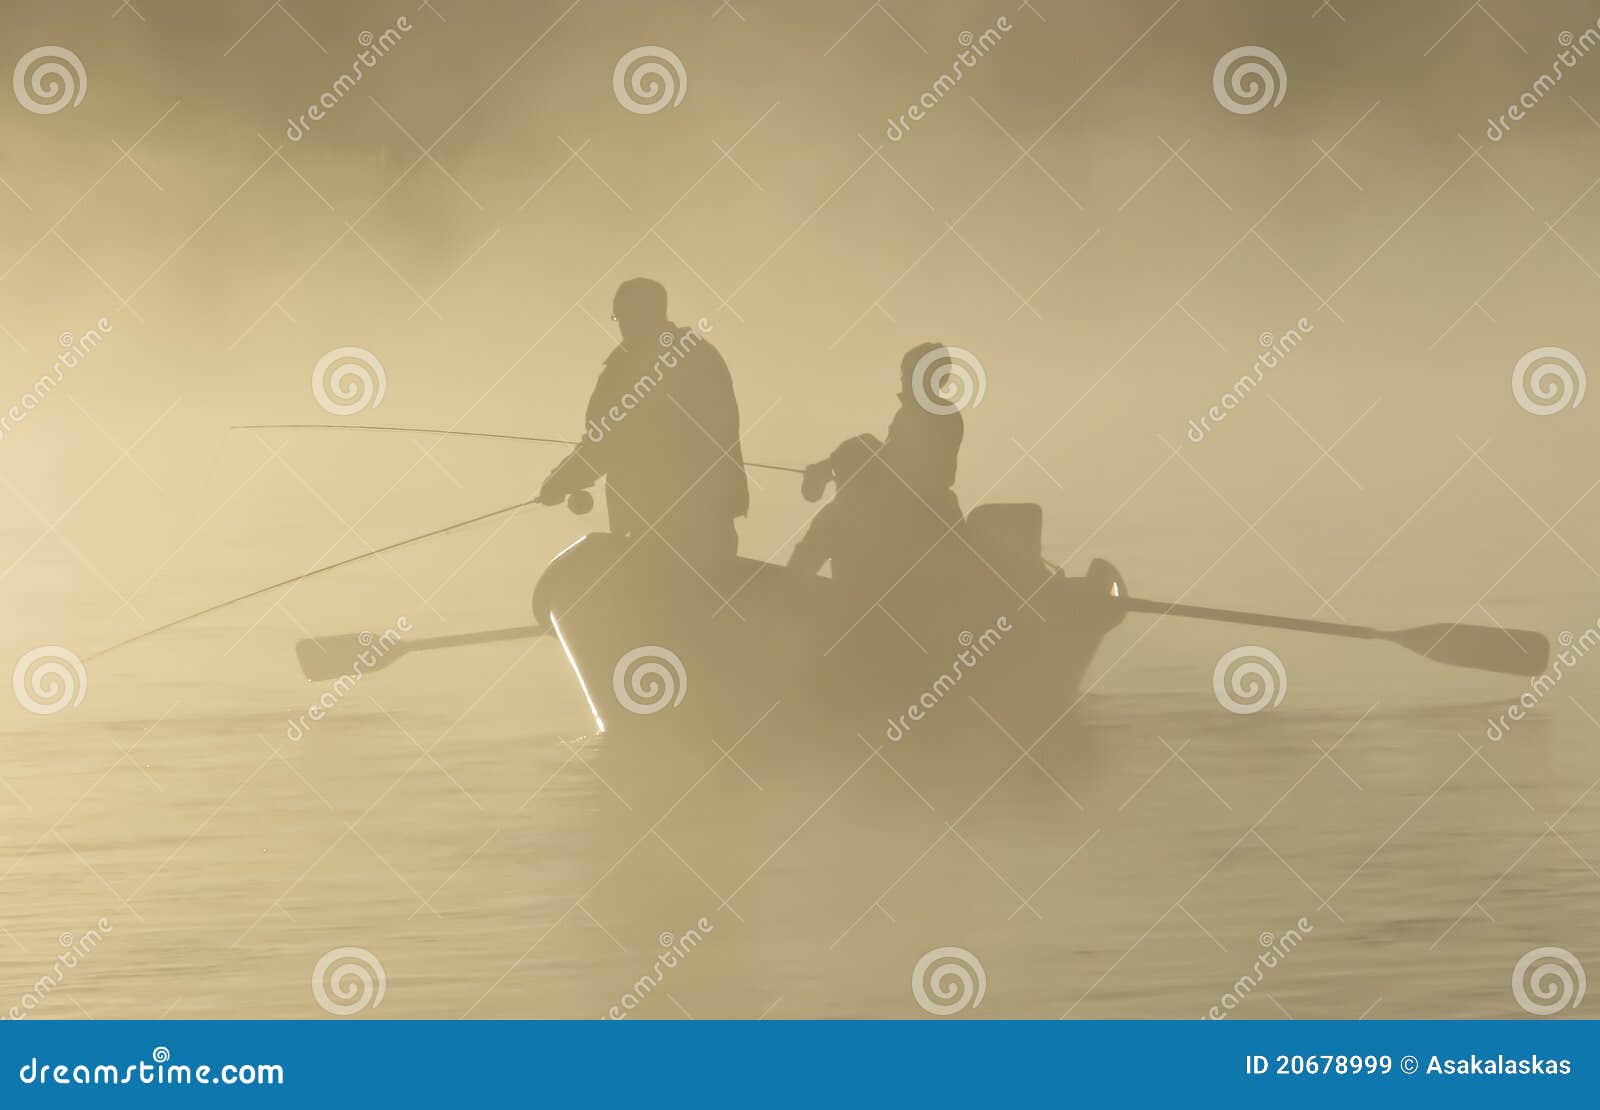 fly fishing in a drift boat in the fog